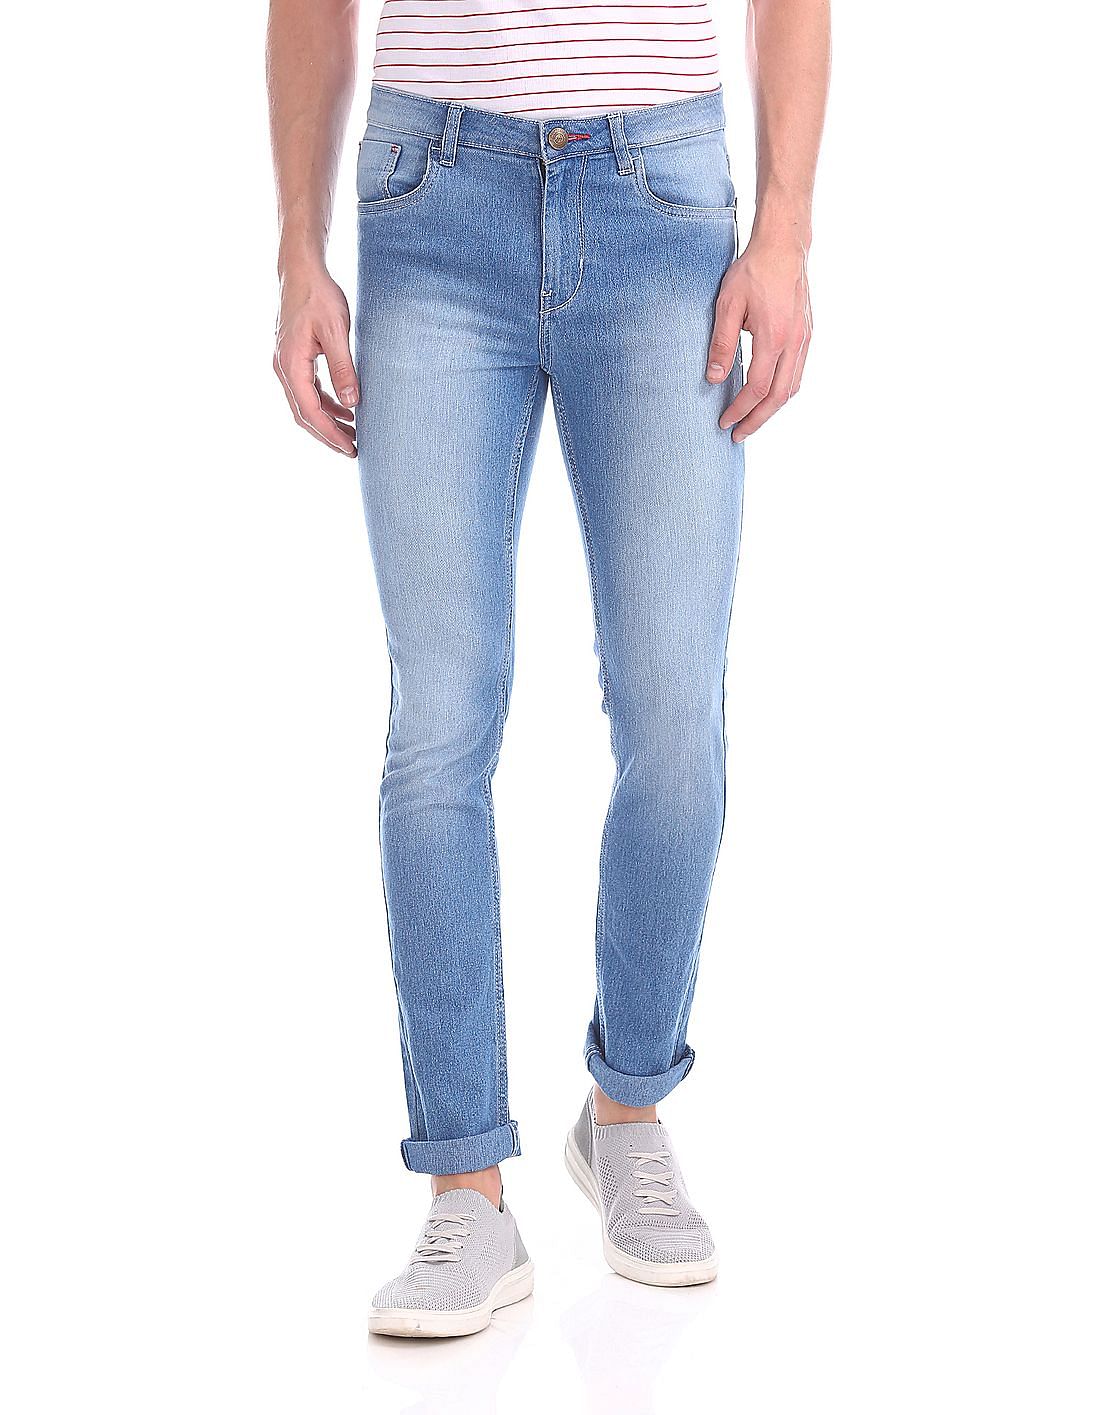 newport jeans official website